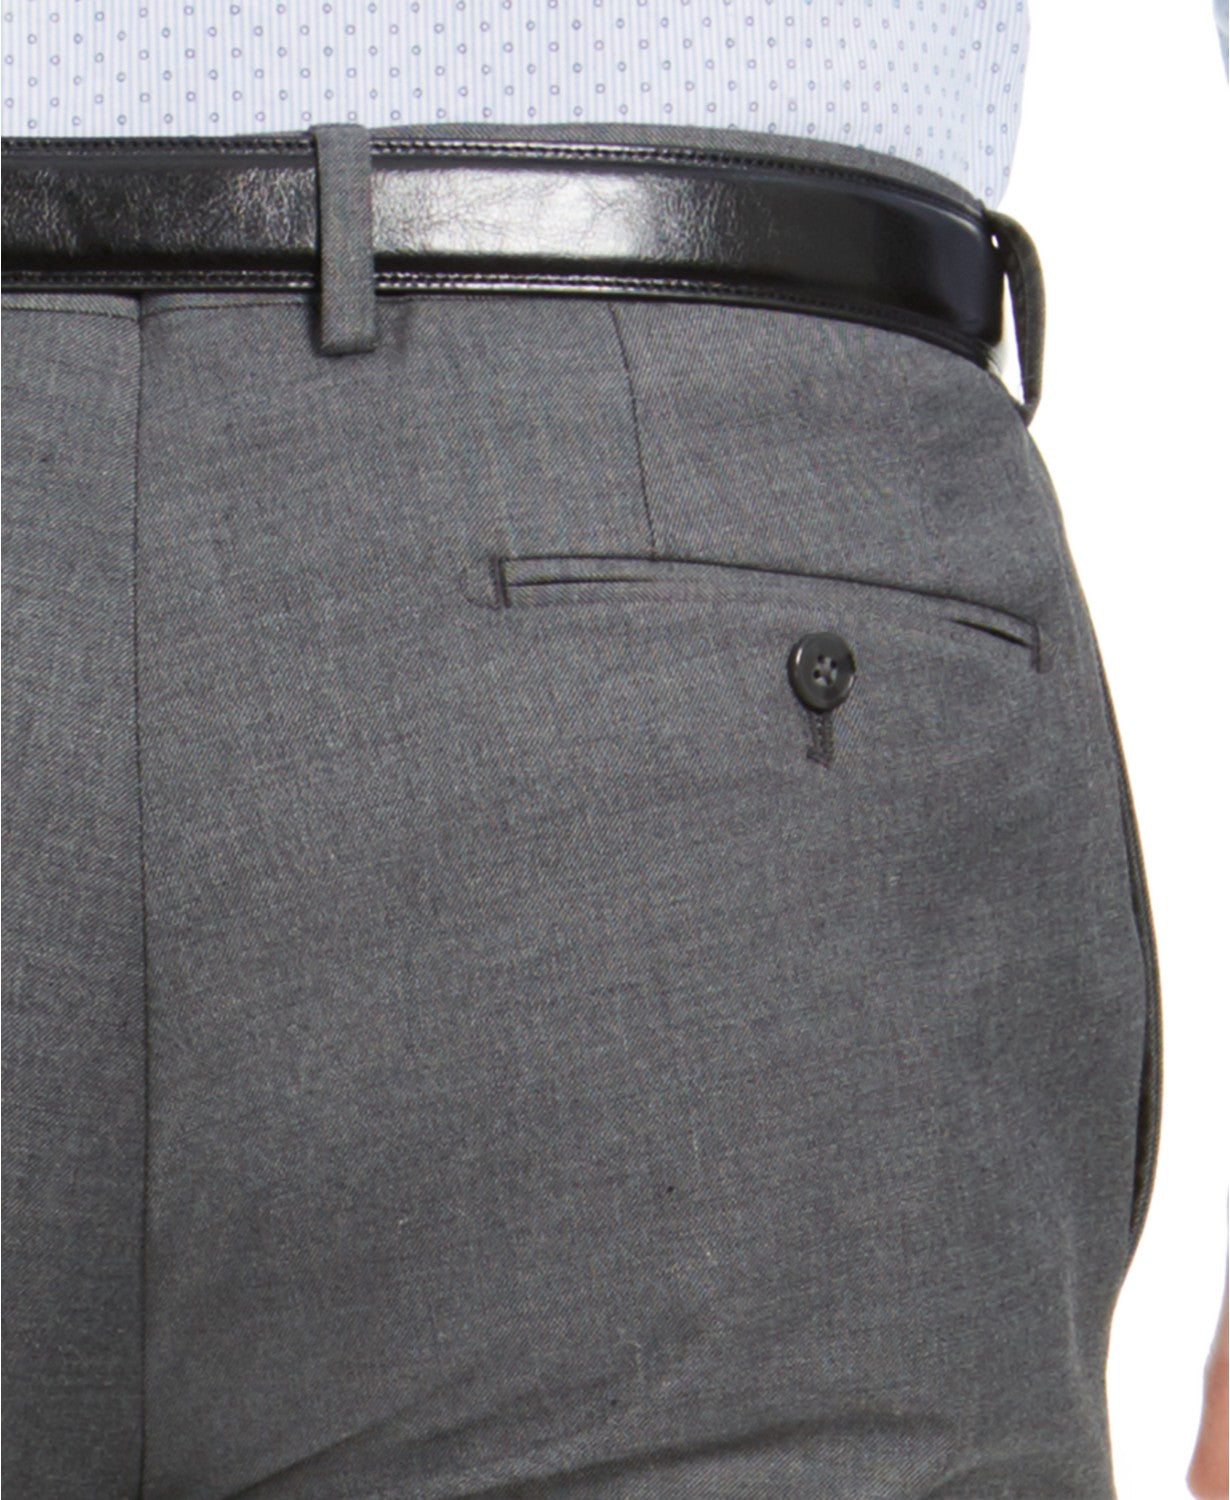 Van Heusen Men's Suit 42R / 35 x 32 Grey Flex Solid Slim Fit Flat Pant